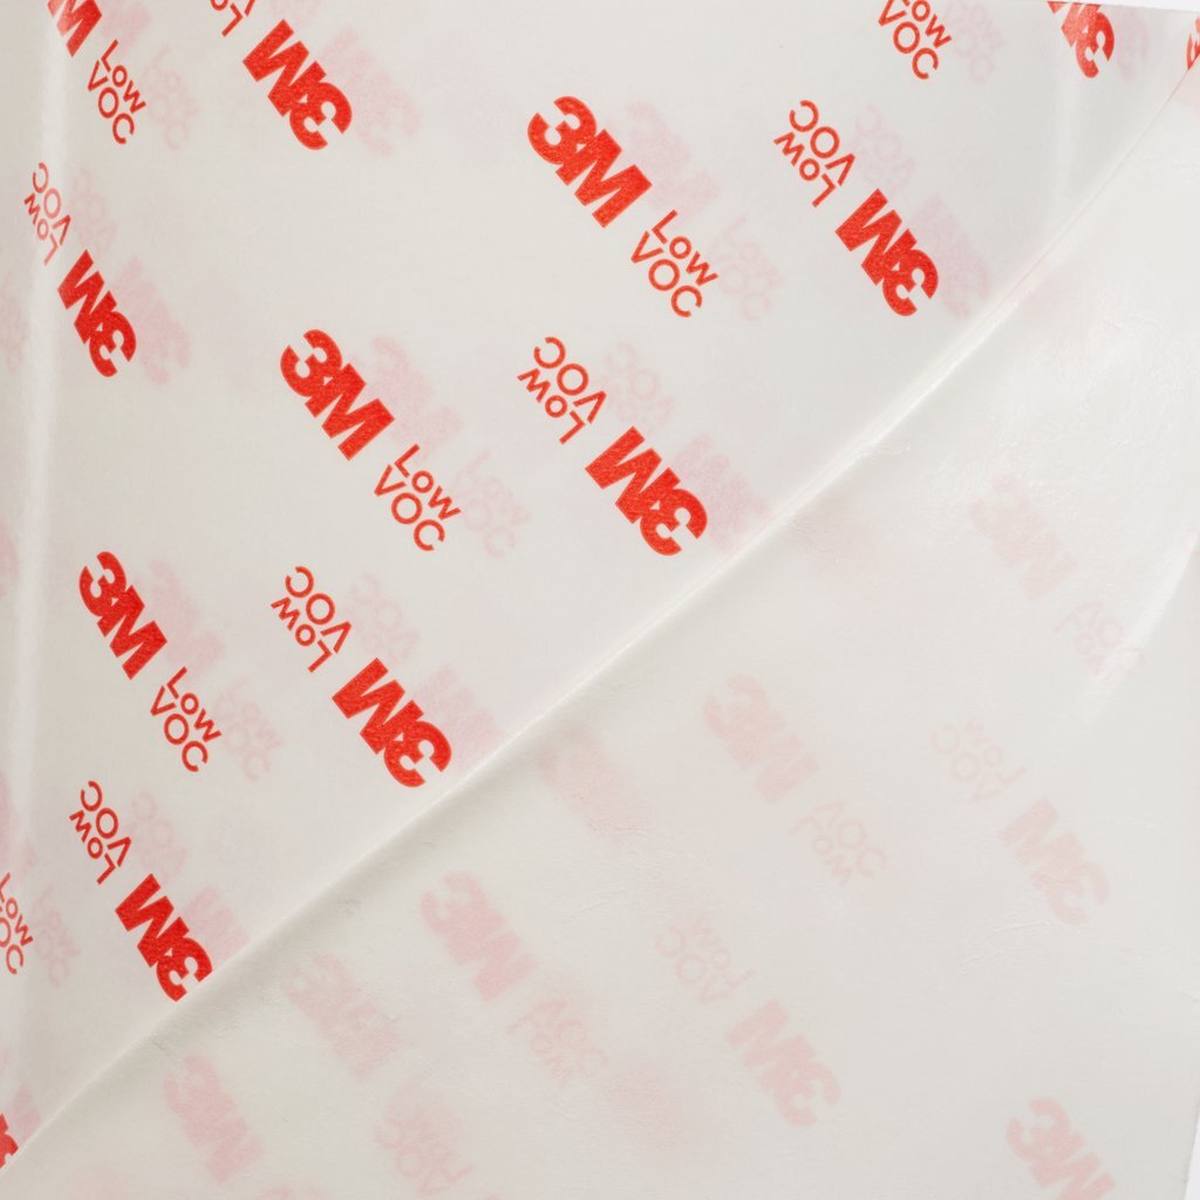 3M Dubbelzijdig plakband met vliespapier als rug 99015LVC, wit, 1000 mm x 50 m, 0,15 mm